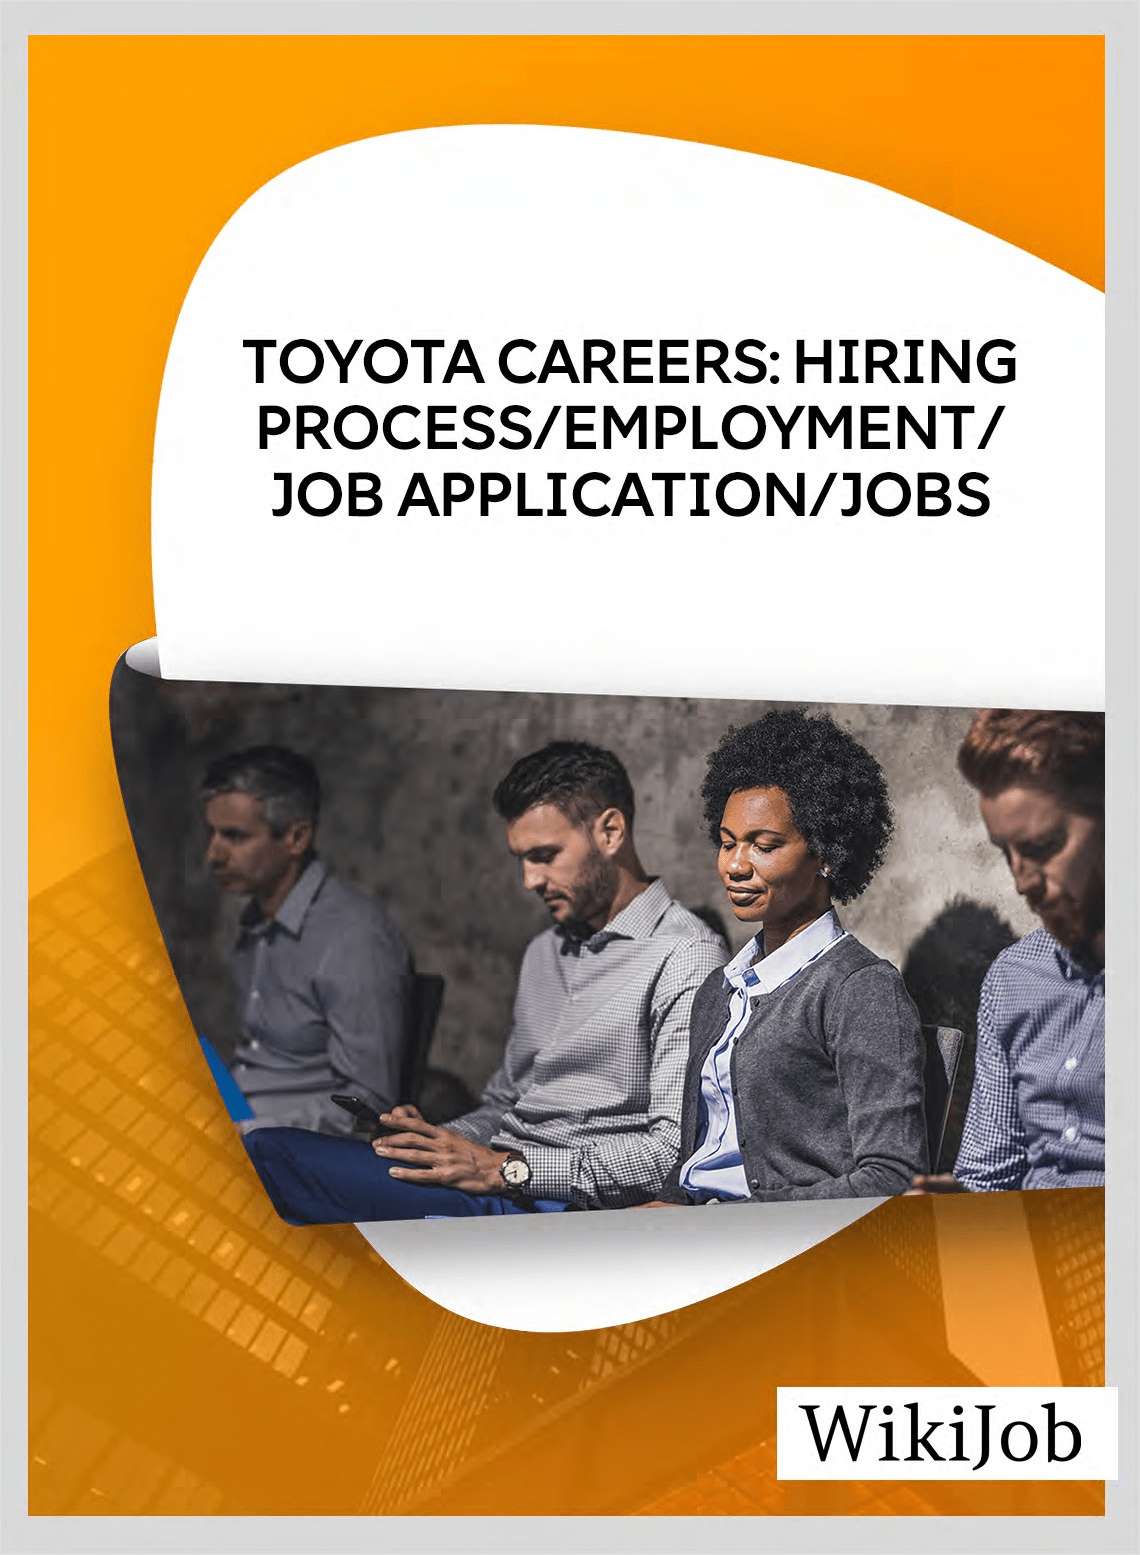 Toyota Careers: Hiring Process/Employment/Job Application/Jobs